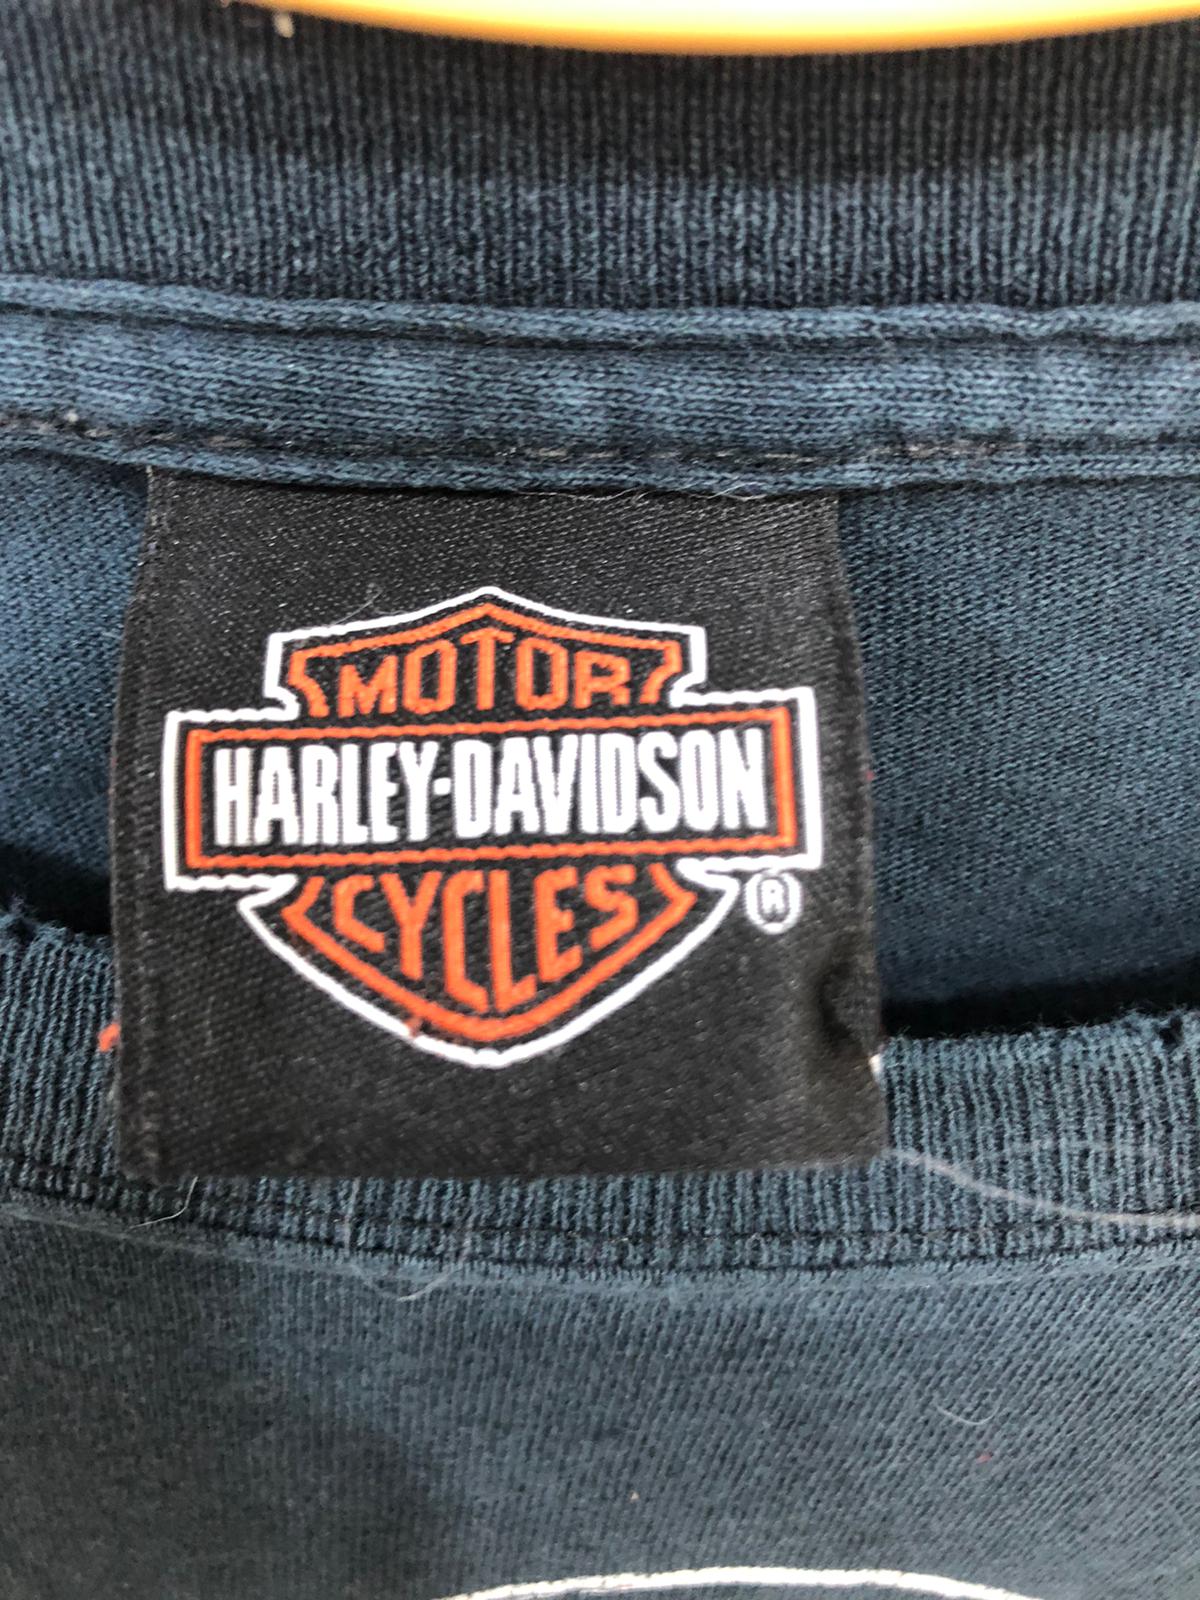 Vintage Harley Davidson tshirts